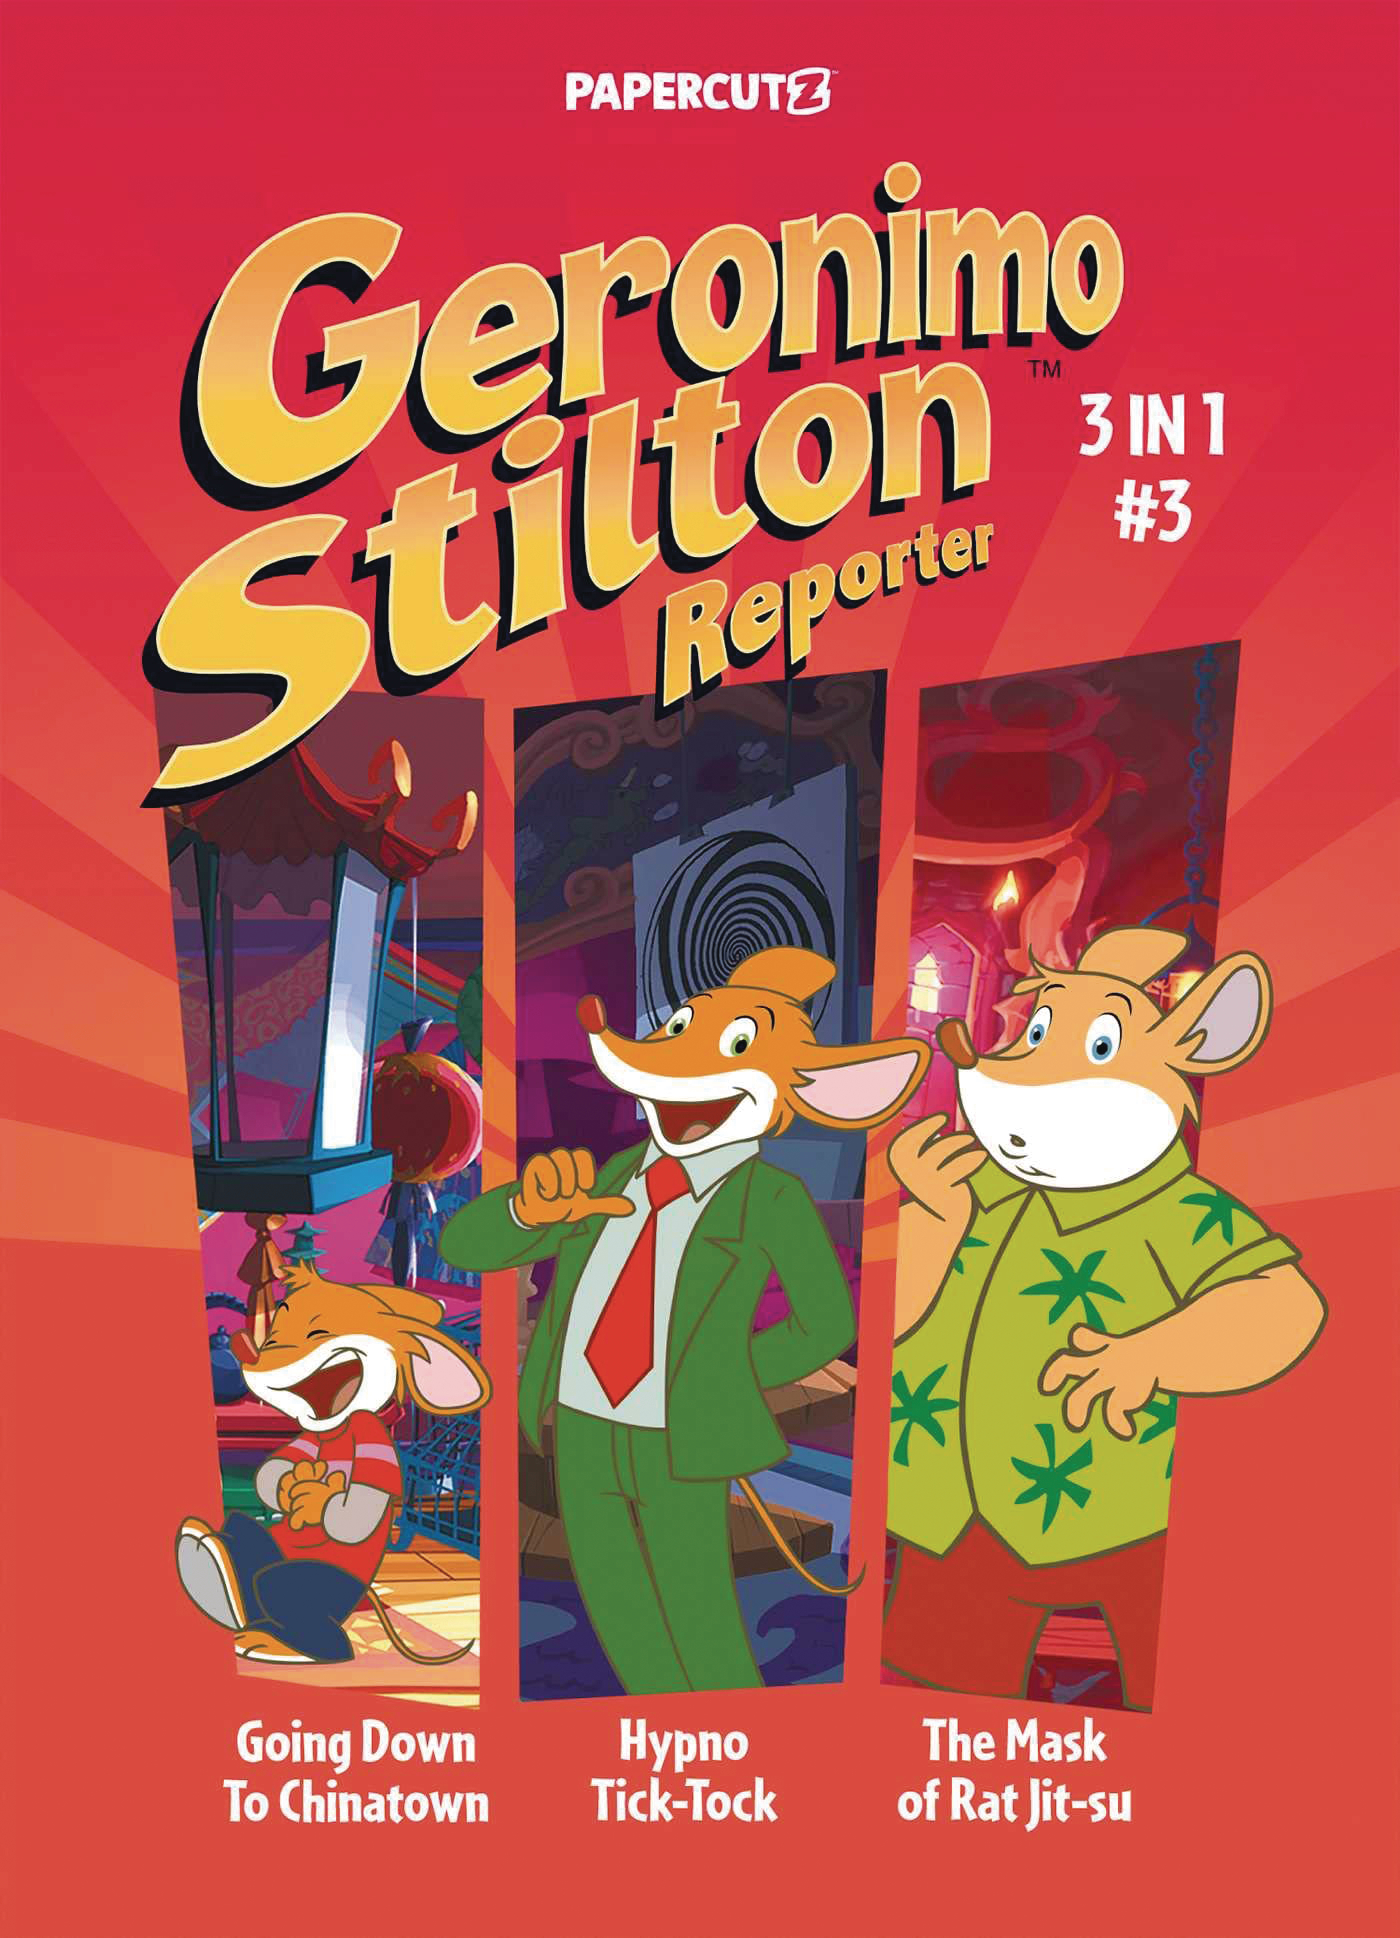 Geronimo Stilton Reporter 3 In 1 Graphic Novel Volume 3